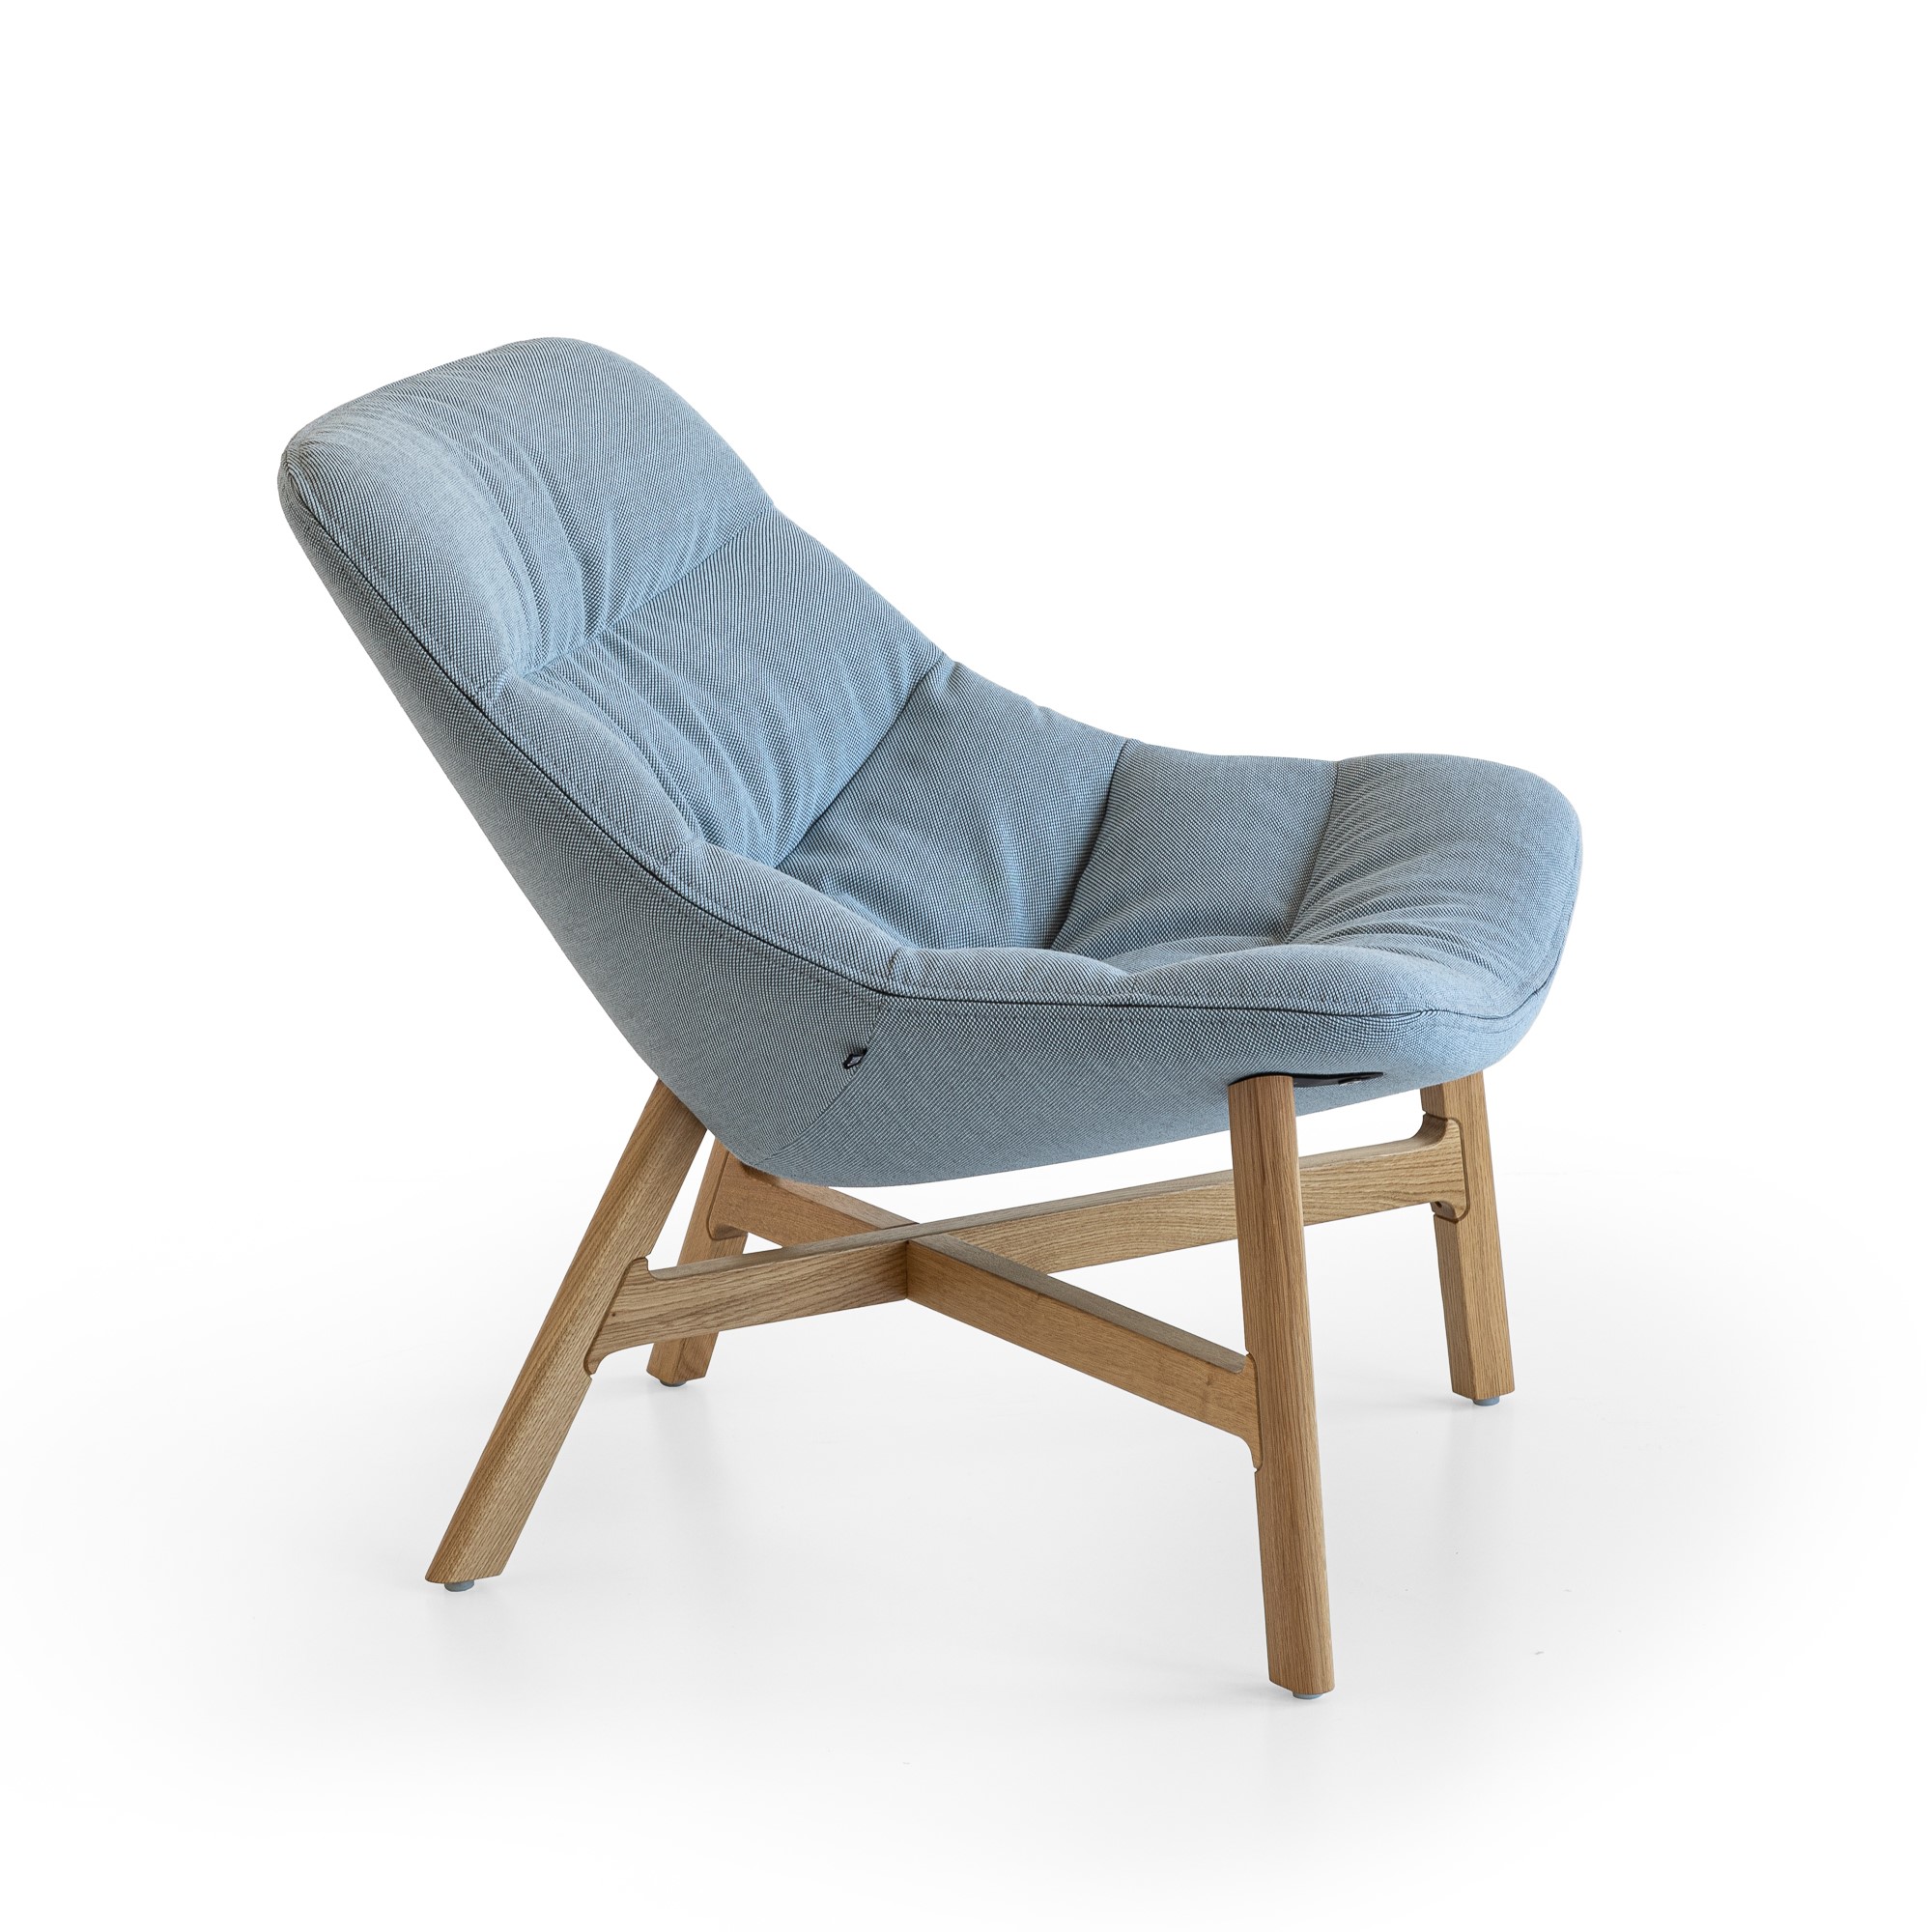 mishell soft armchair wooden legs2